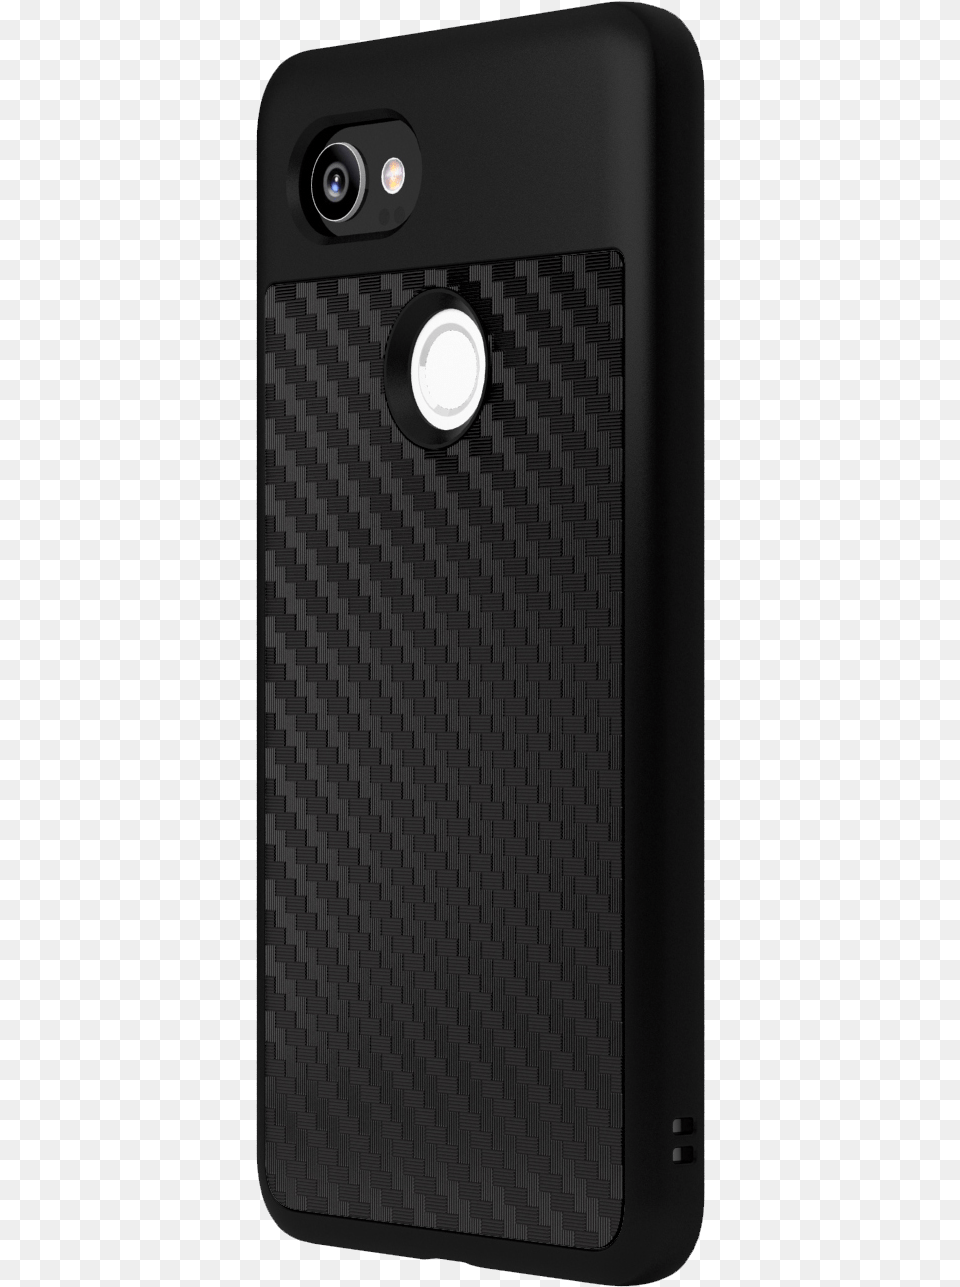 Pixel 2 Xl 9 Smartphone, Electronics, Mobile Phone, Phone, Speaker Png Image